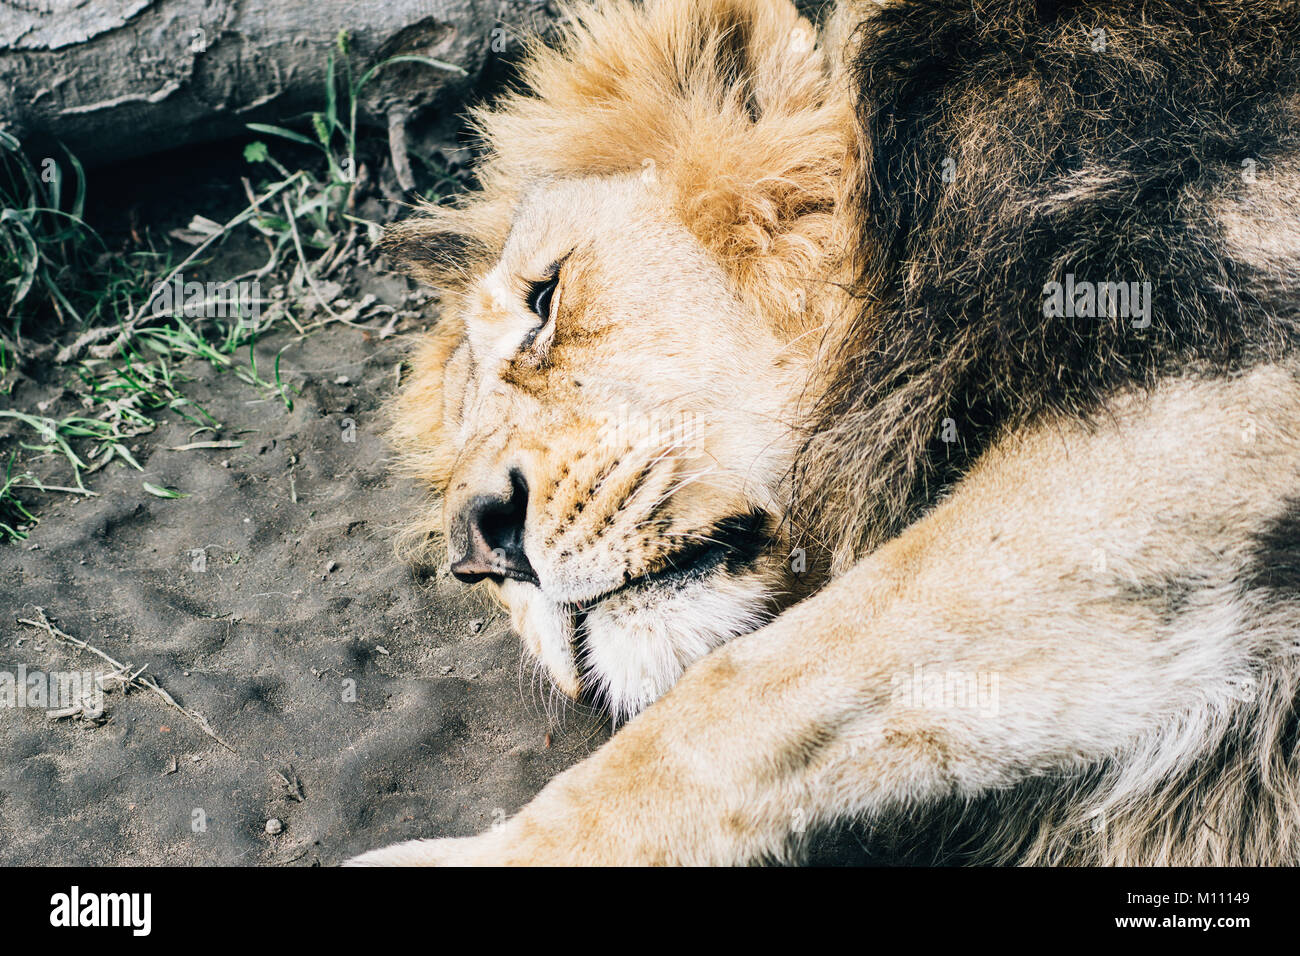 Lion sleeping closeup portrait Stock Photo